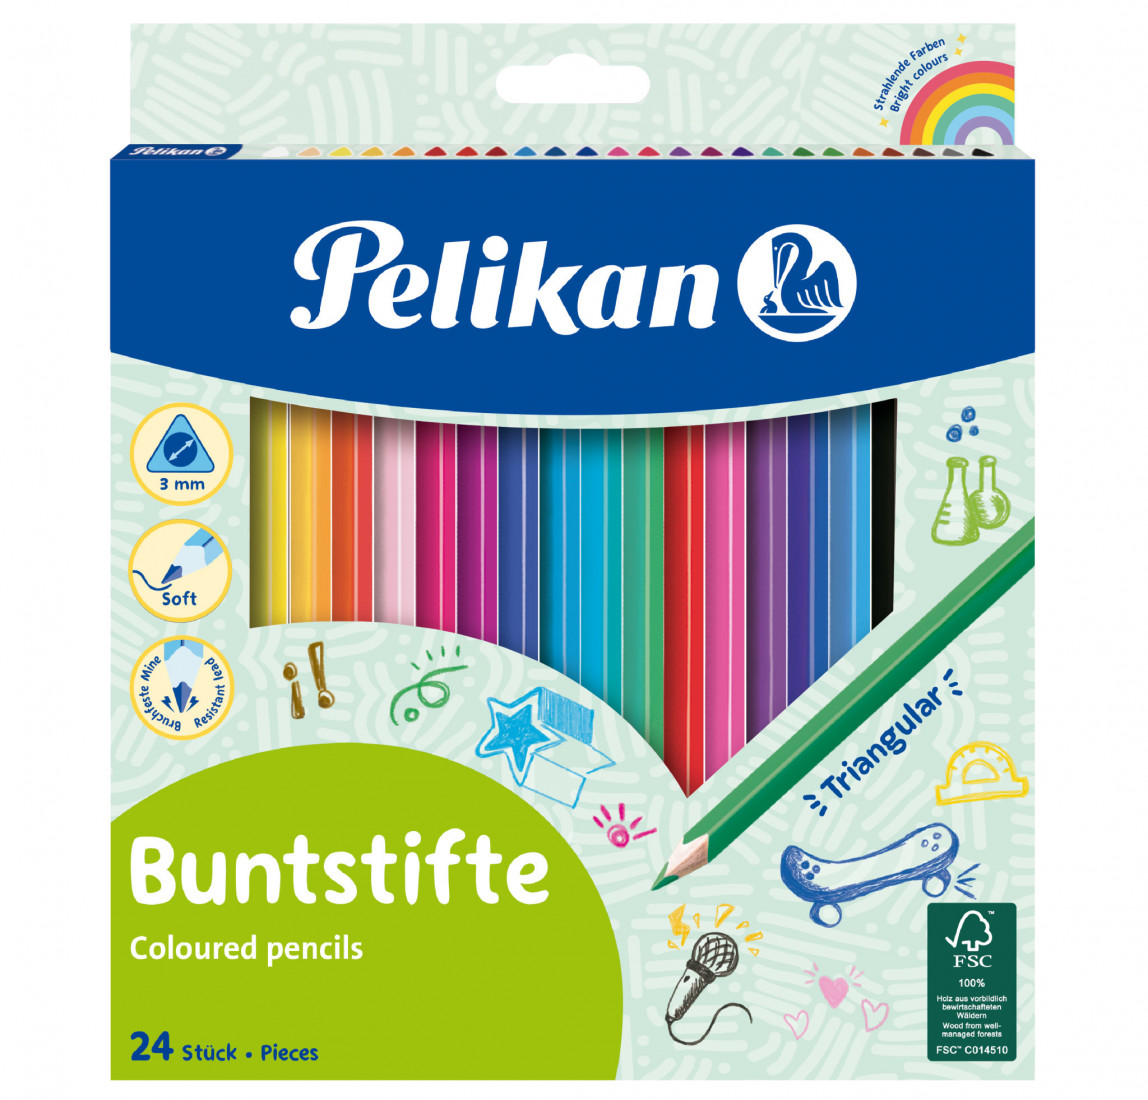 Pelikan Buntstifte  Coloured Pencils 24 pieces  700122